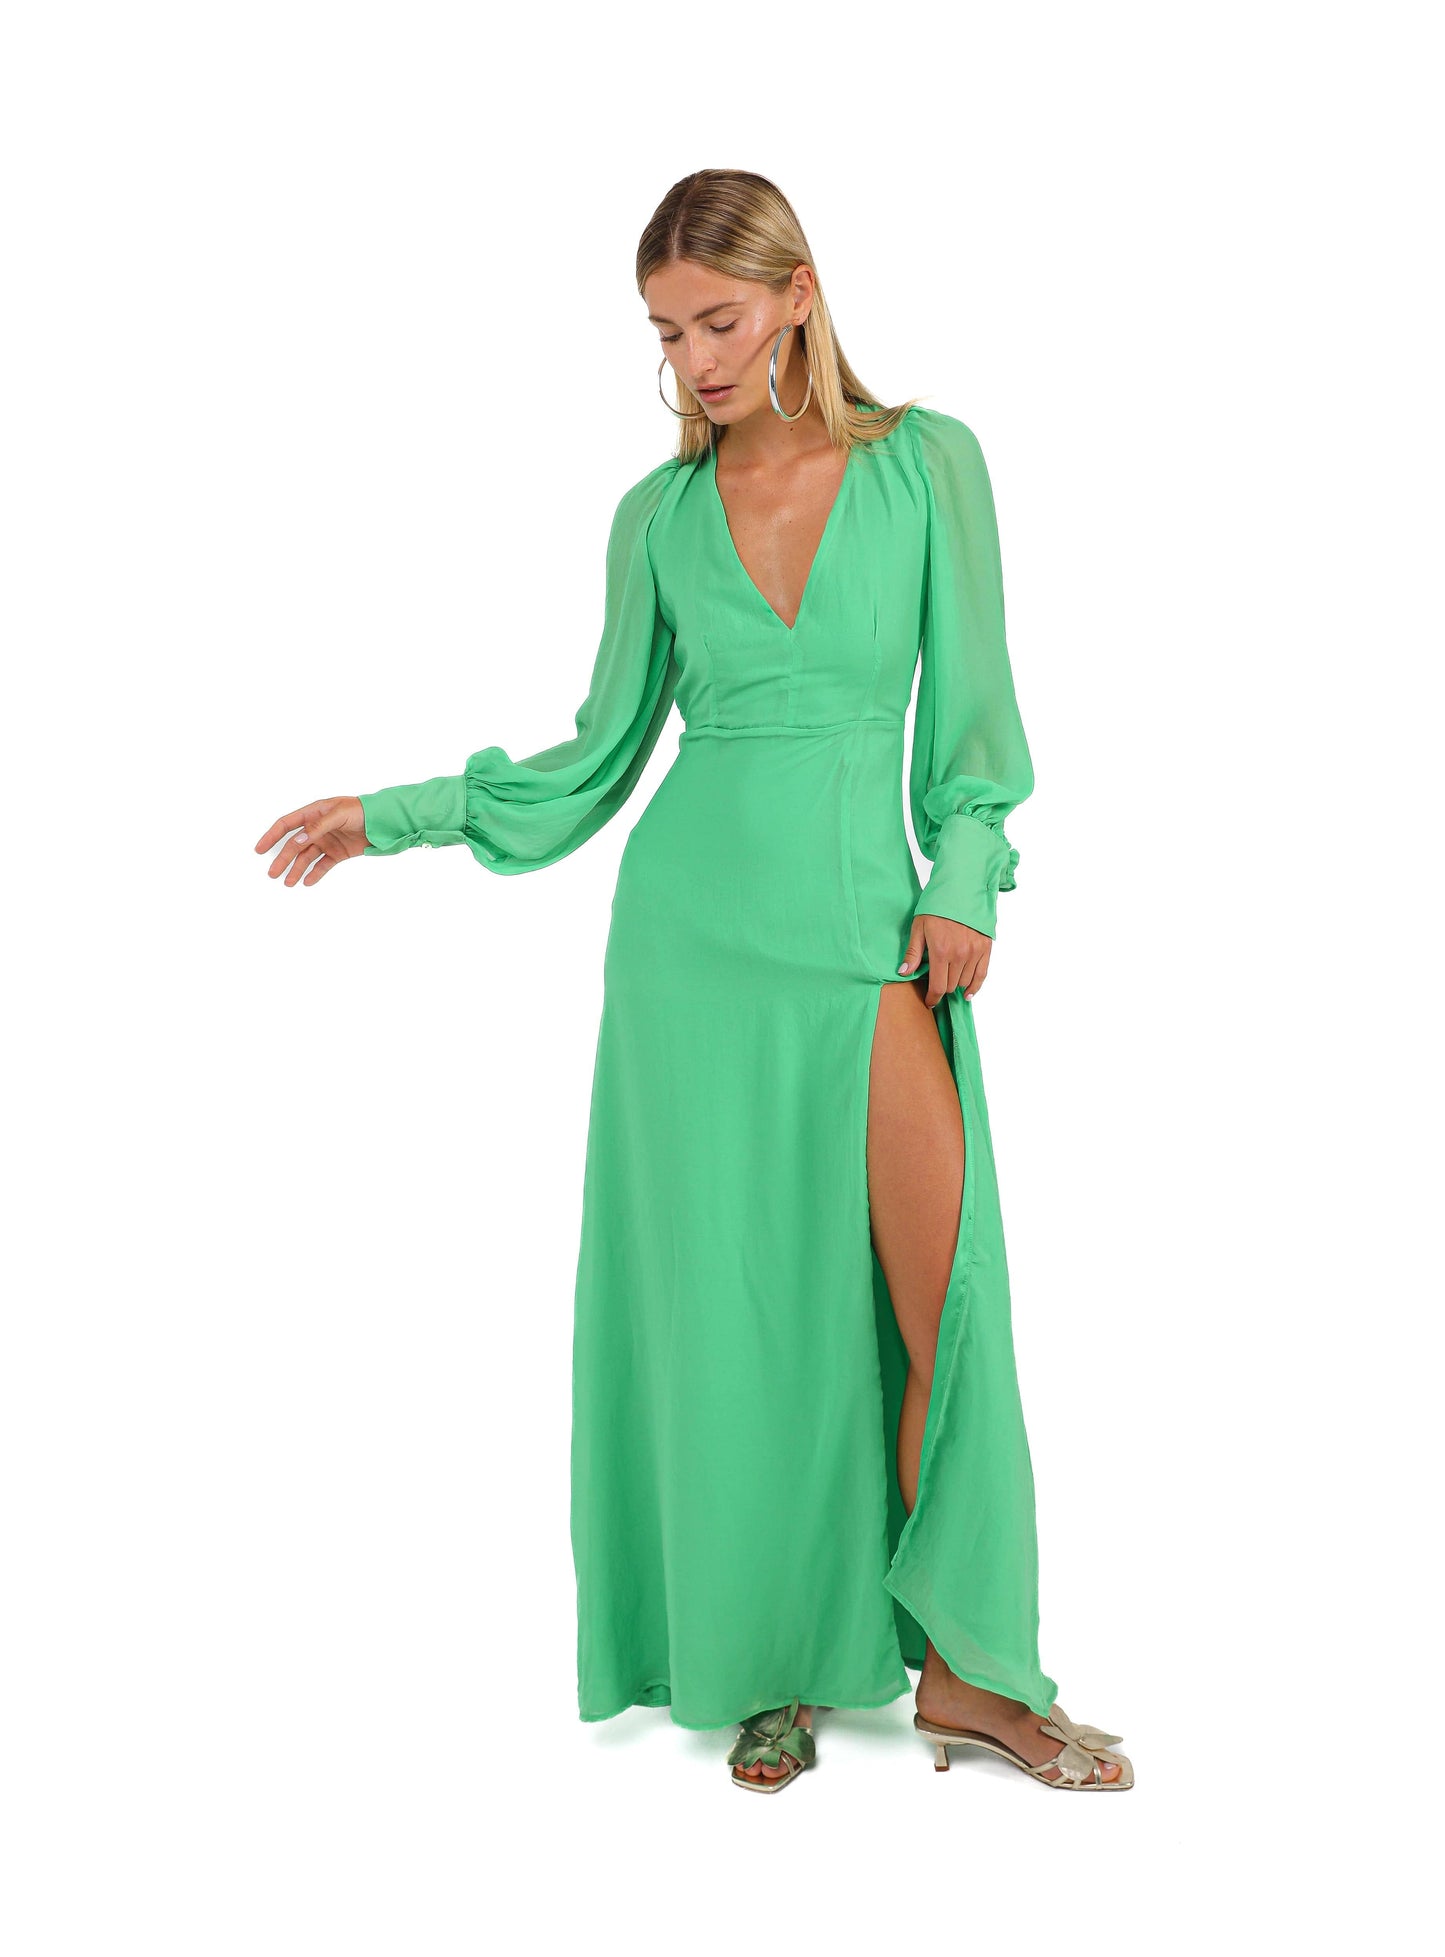 KARLA GREEN DRESS